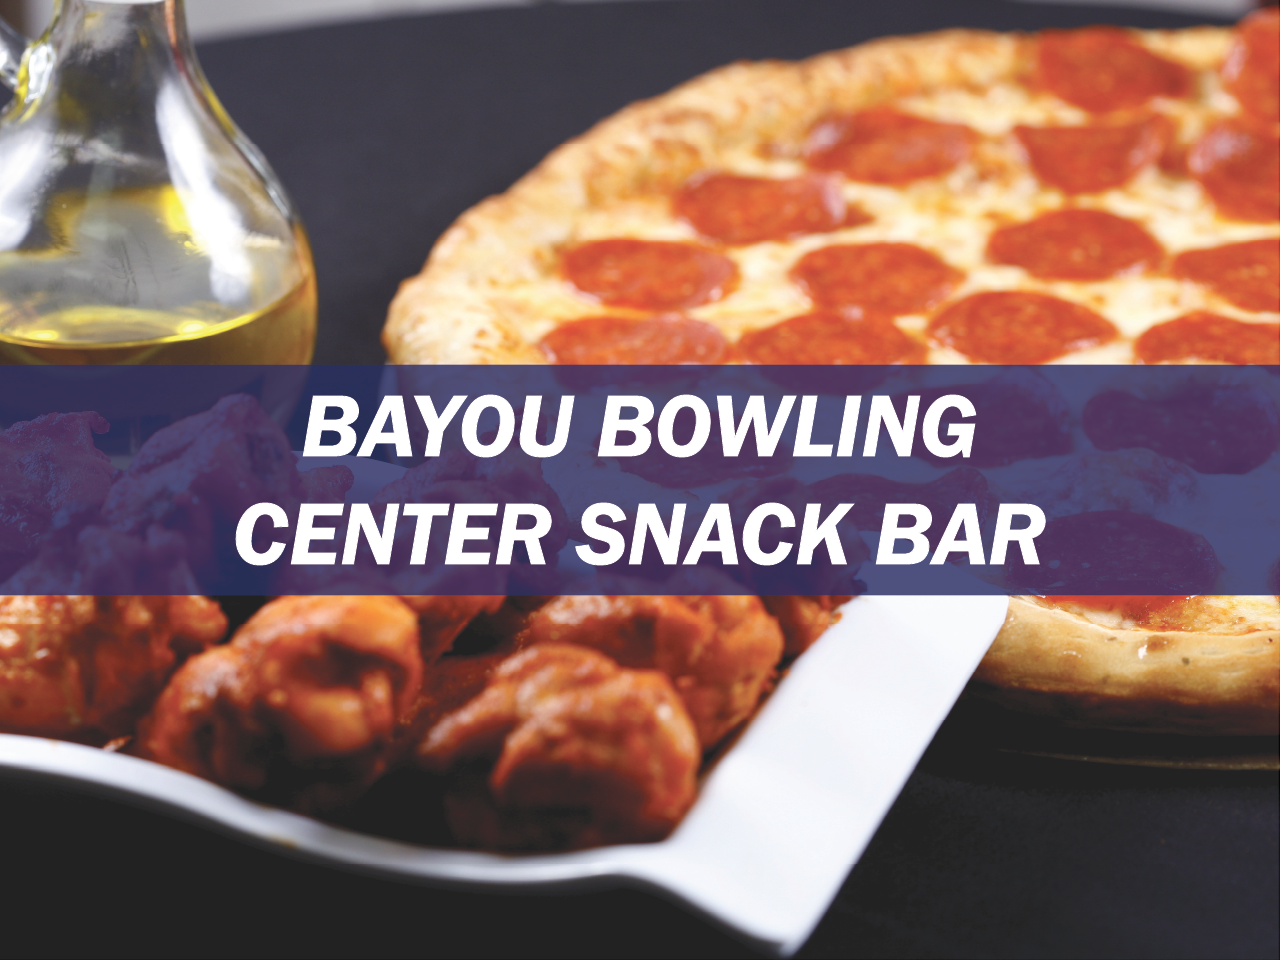 Bayou Bowling Center Snack Bar Survey